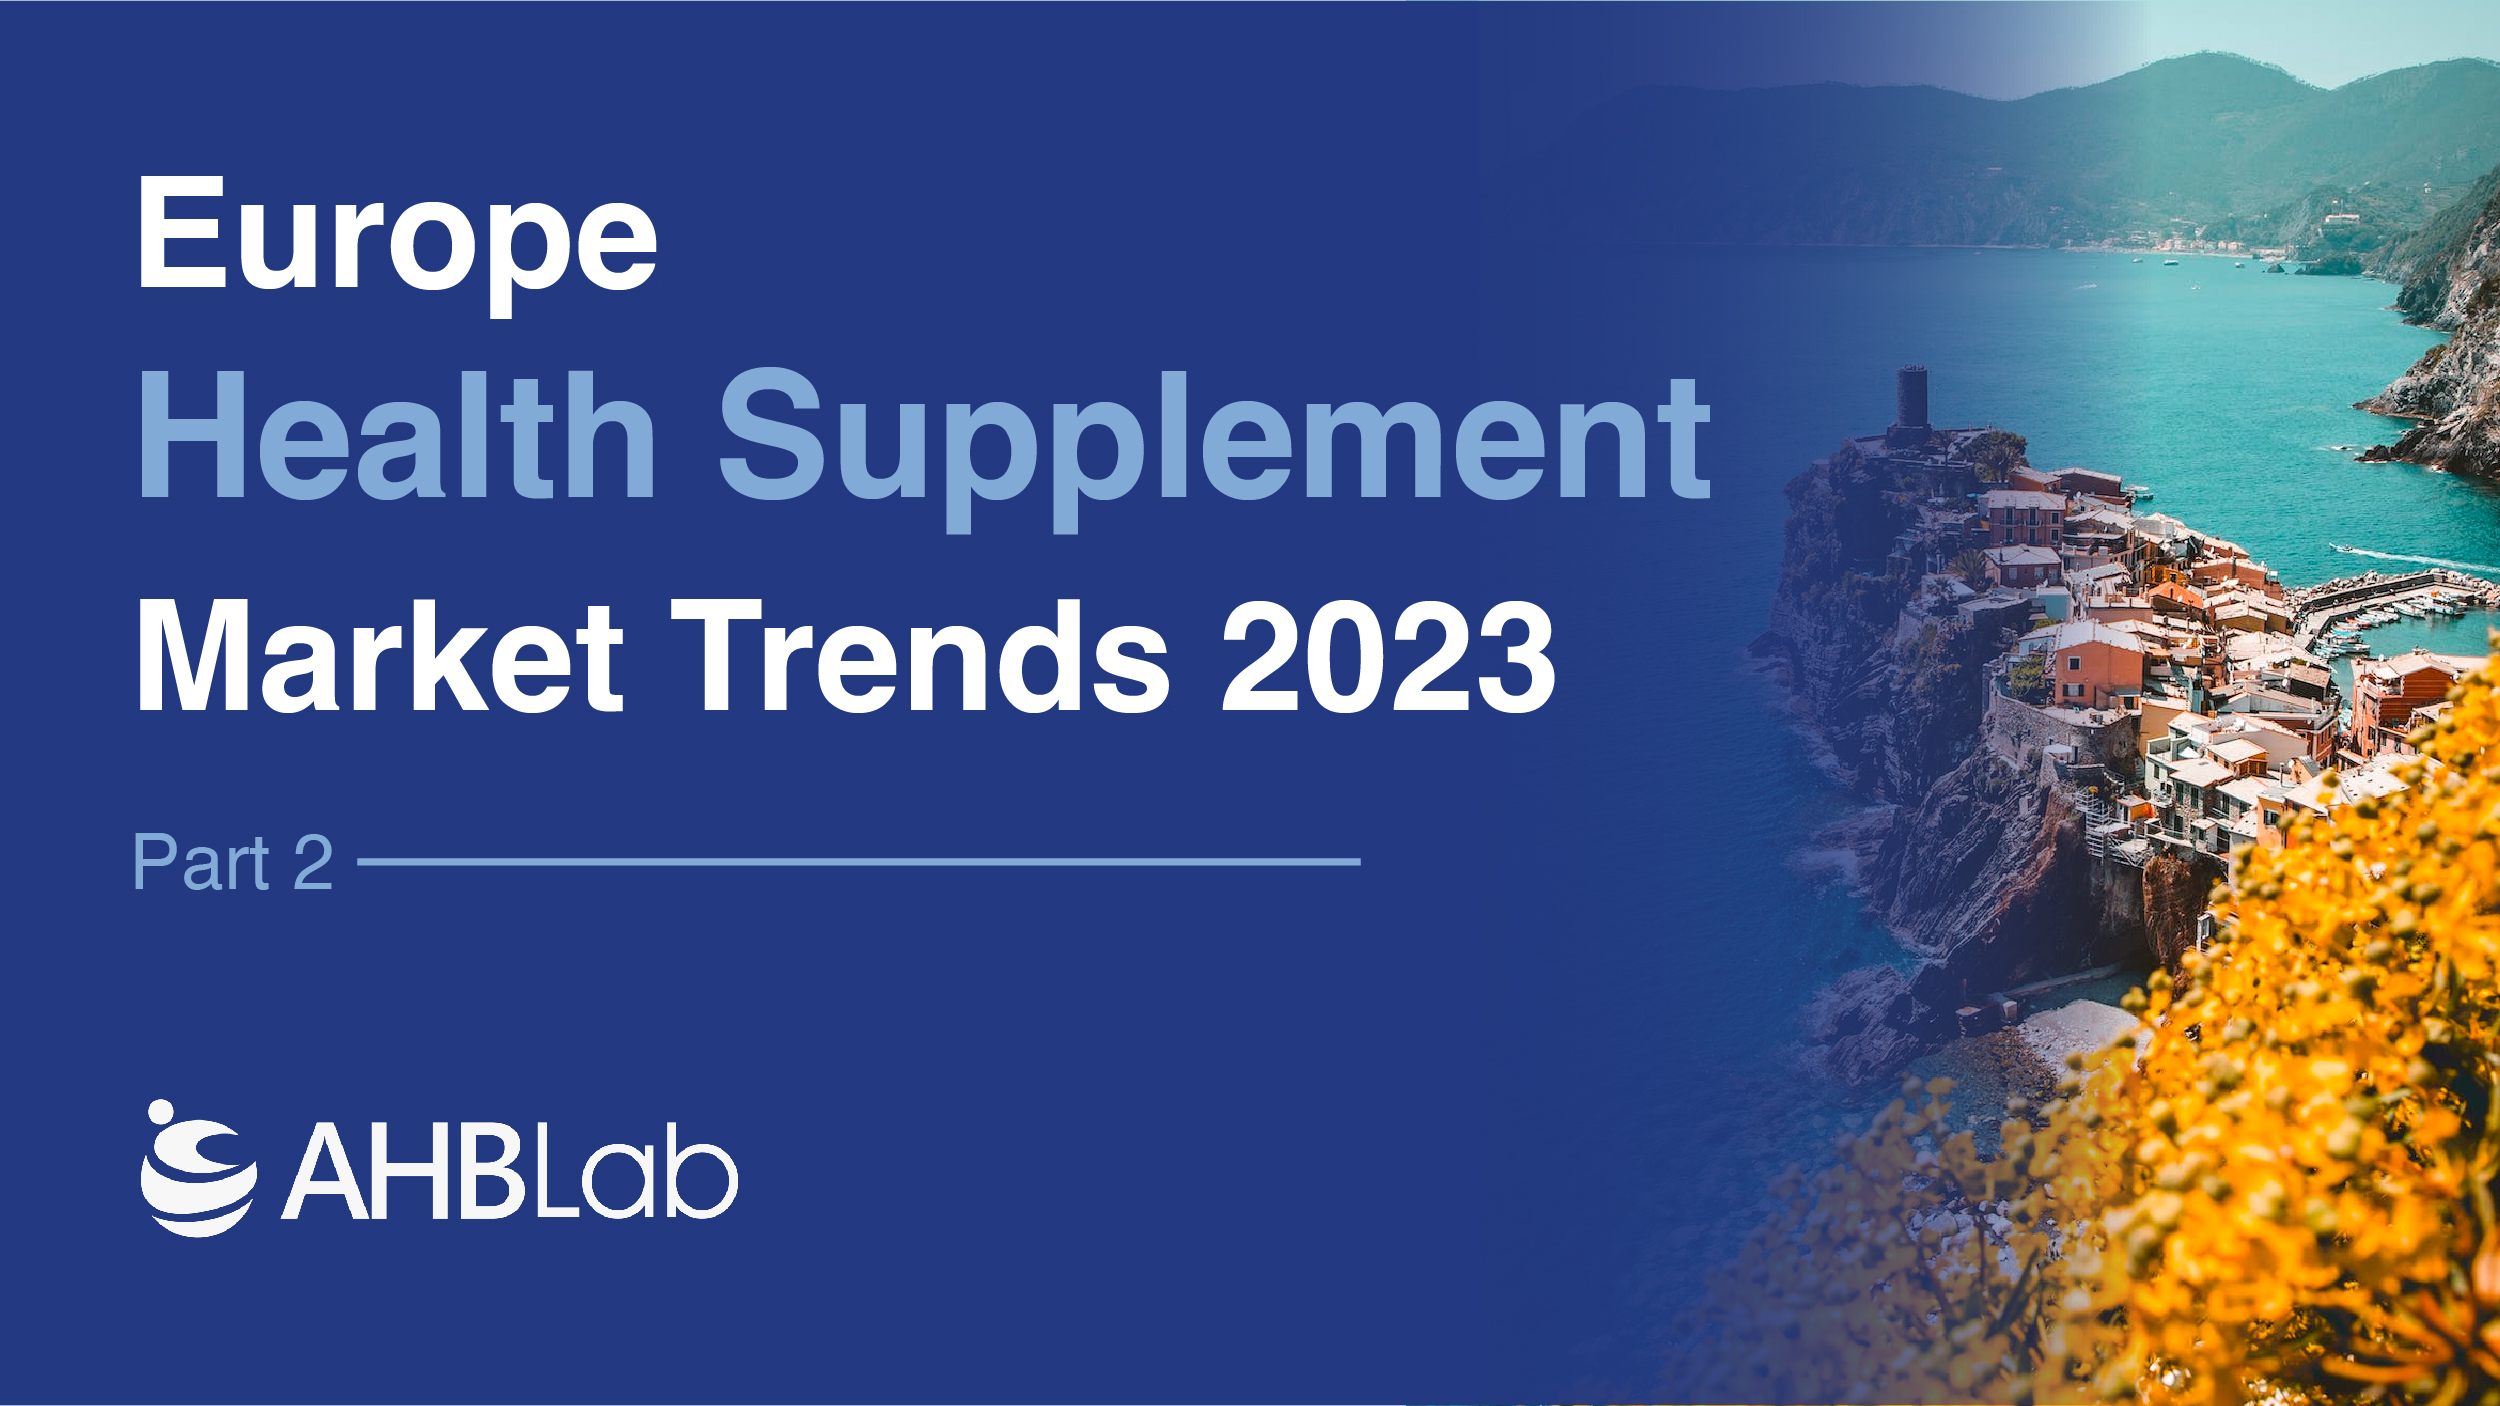 European health supplement market trends 2023